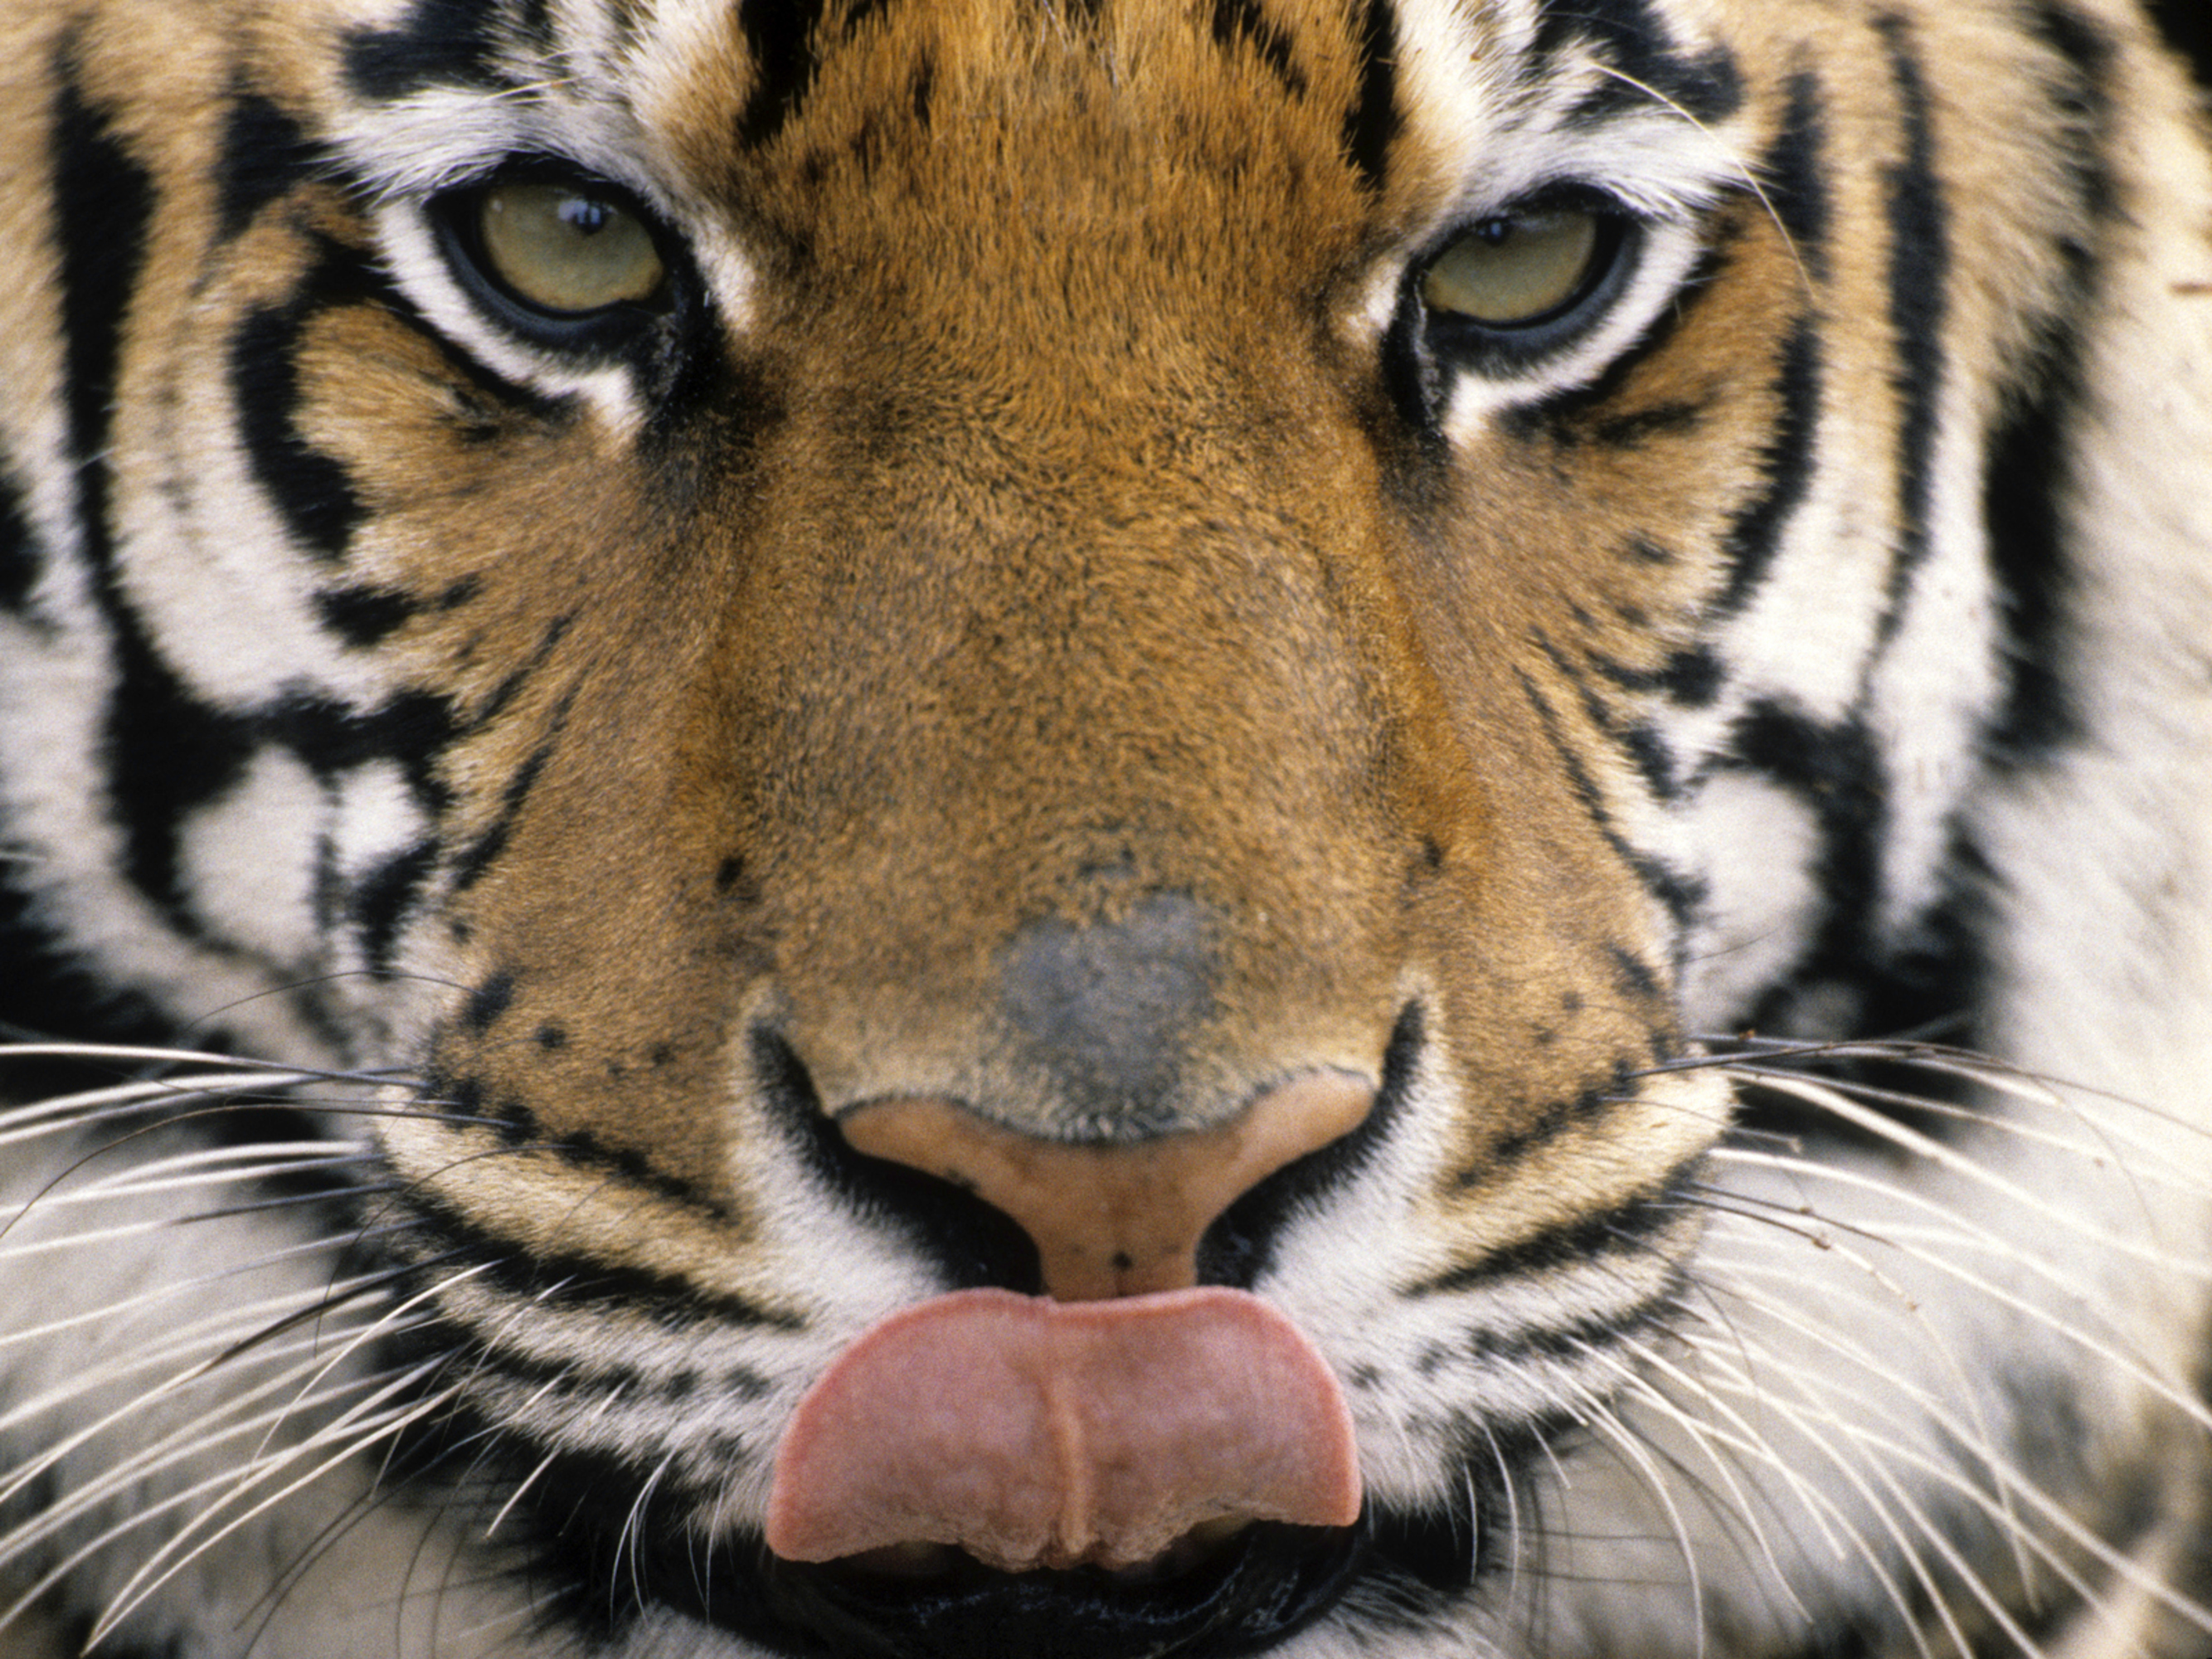 Bengal tiger in India | Human Nature - Conservation International Blog